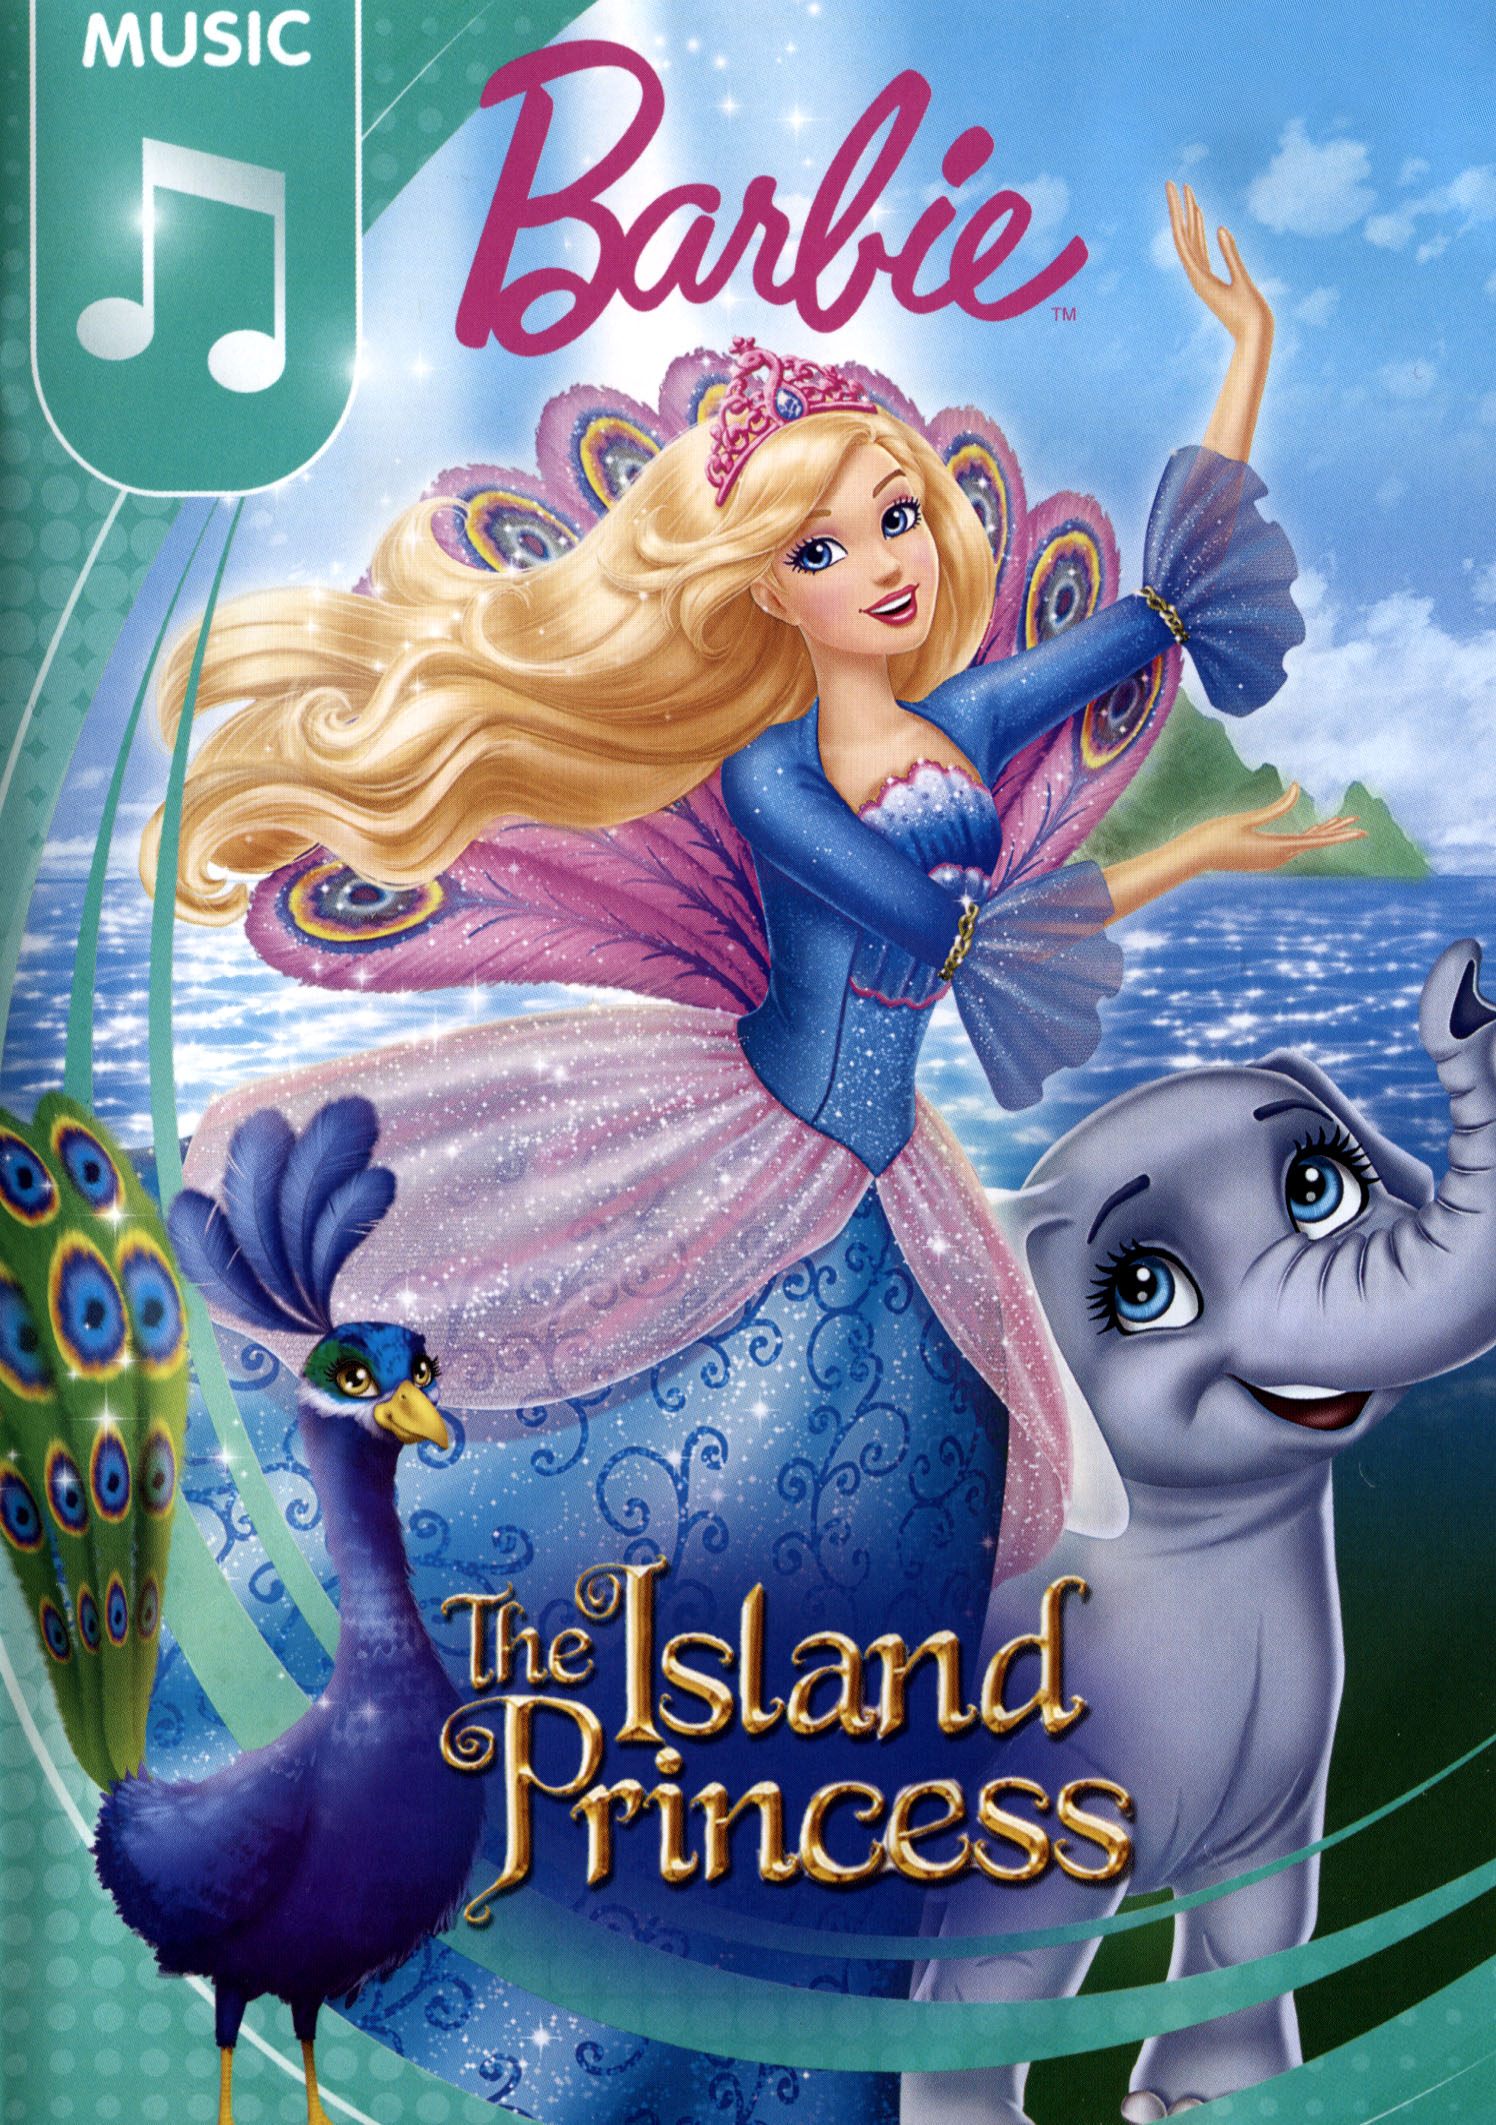 2007 Barbie As The Island Princess